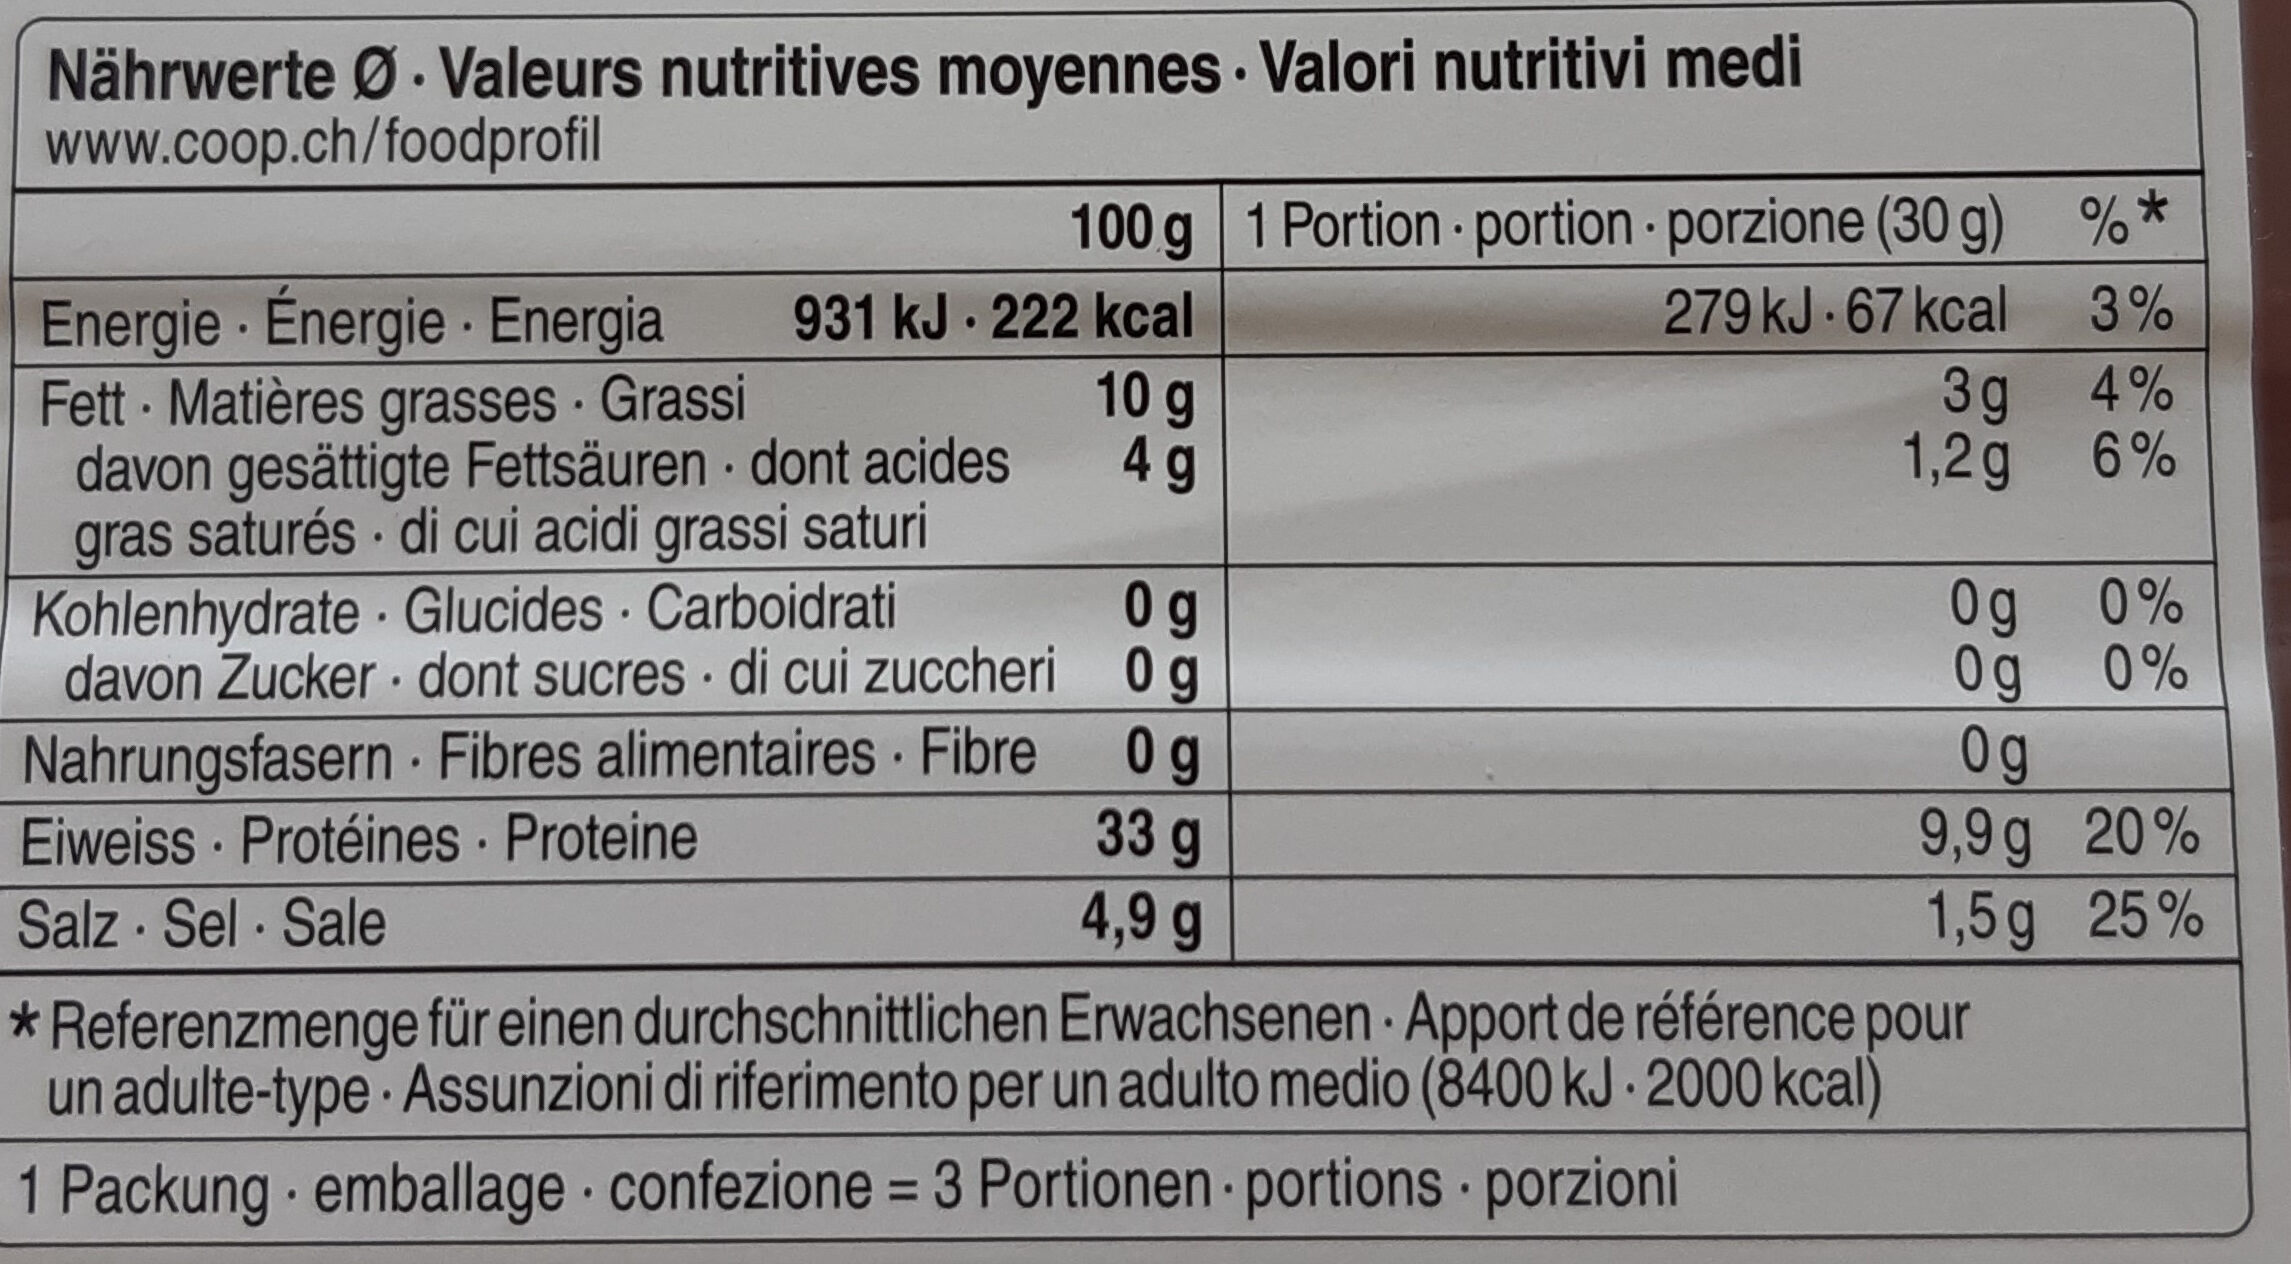 Jambon cru des Grisons - Nutrition facts - fr